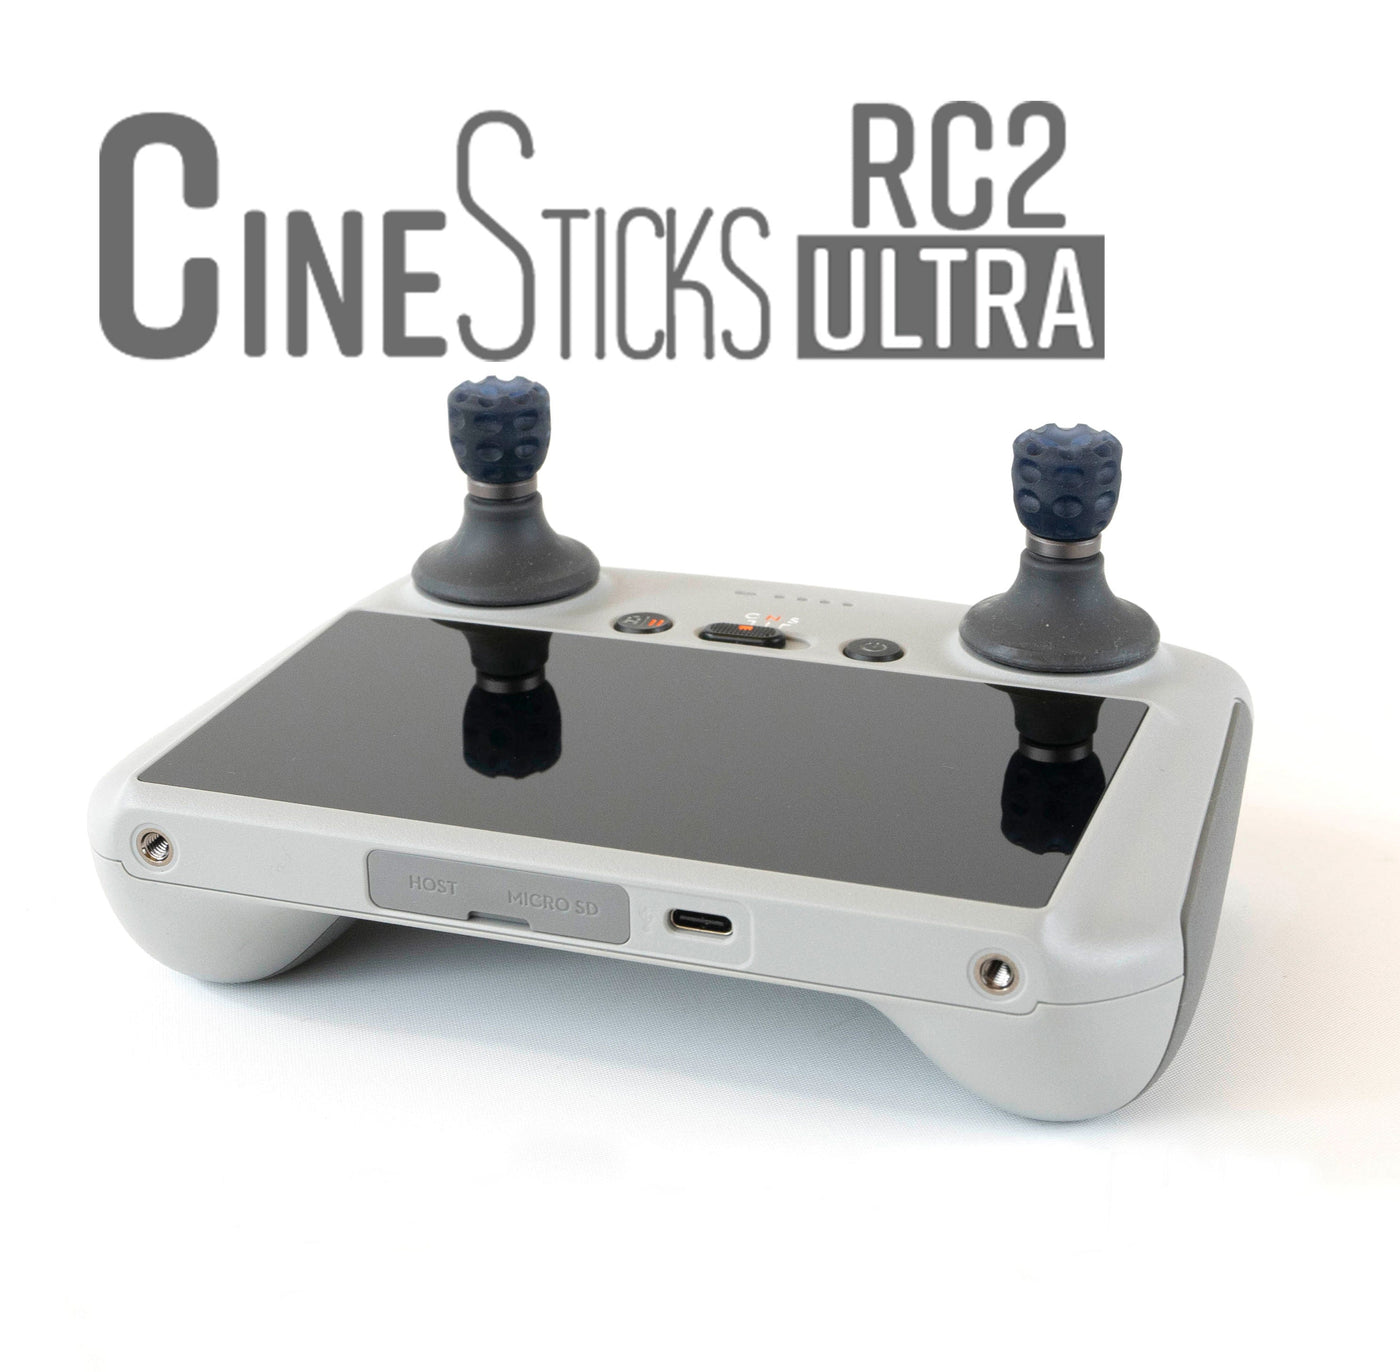 CineSticks RC2 Pro - Royaume-Uni